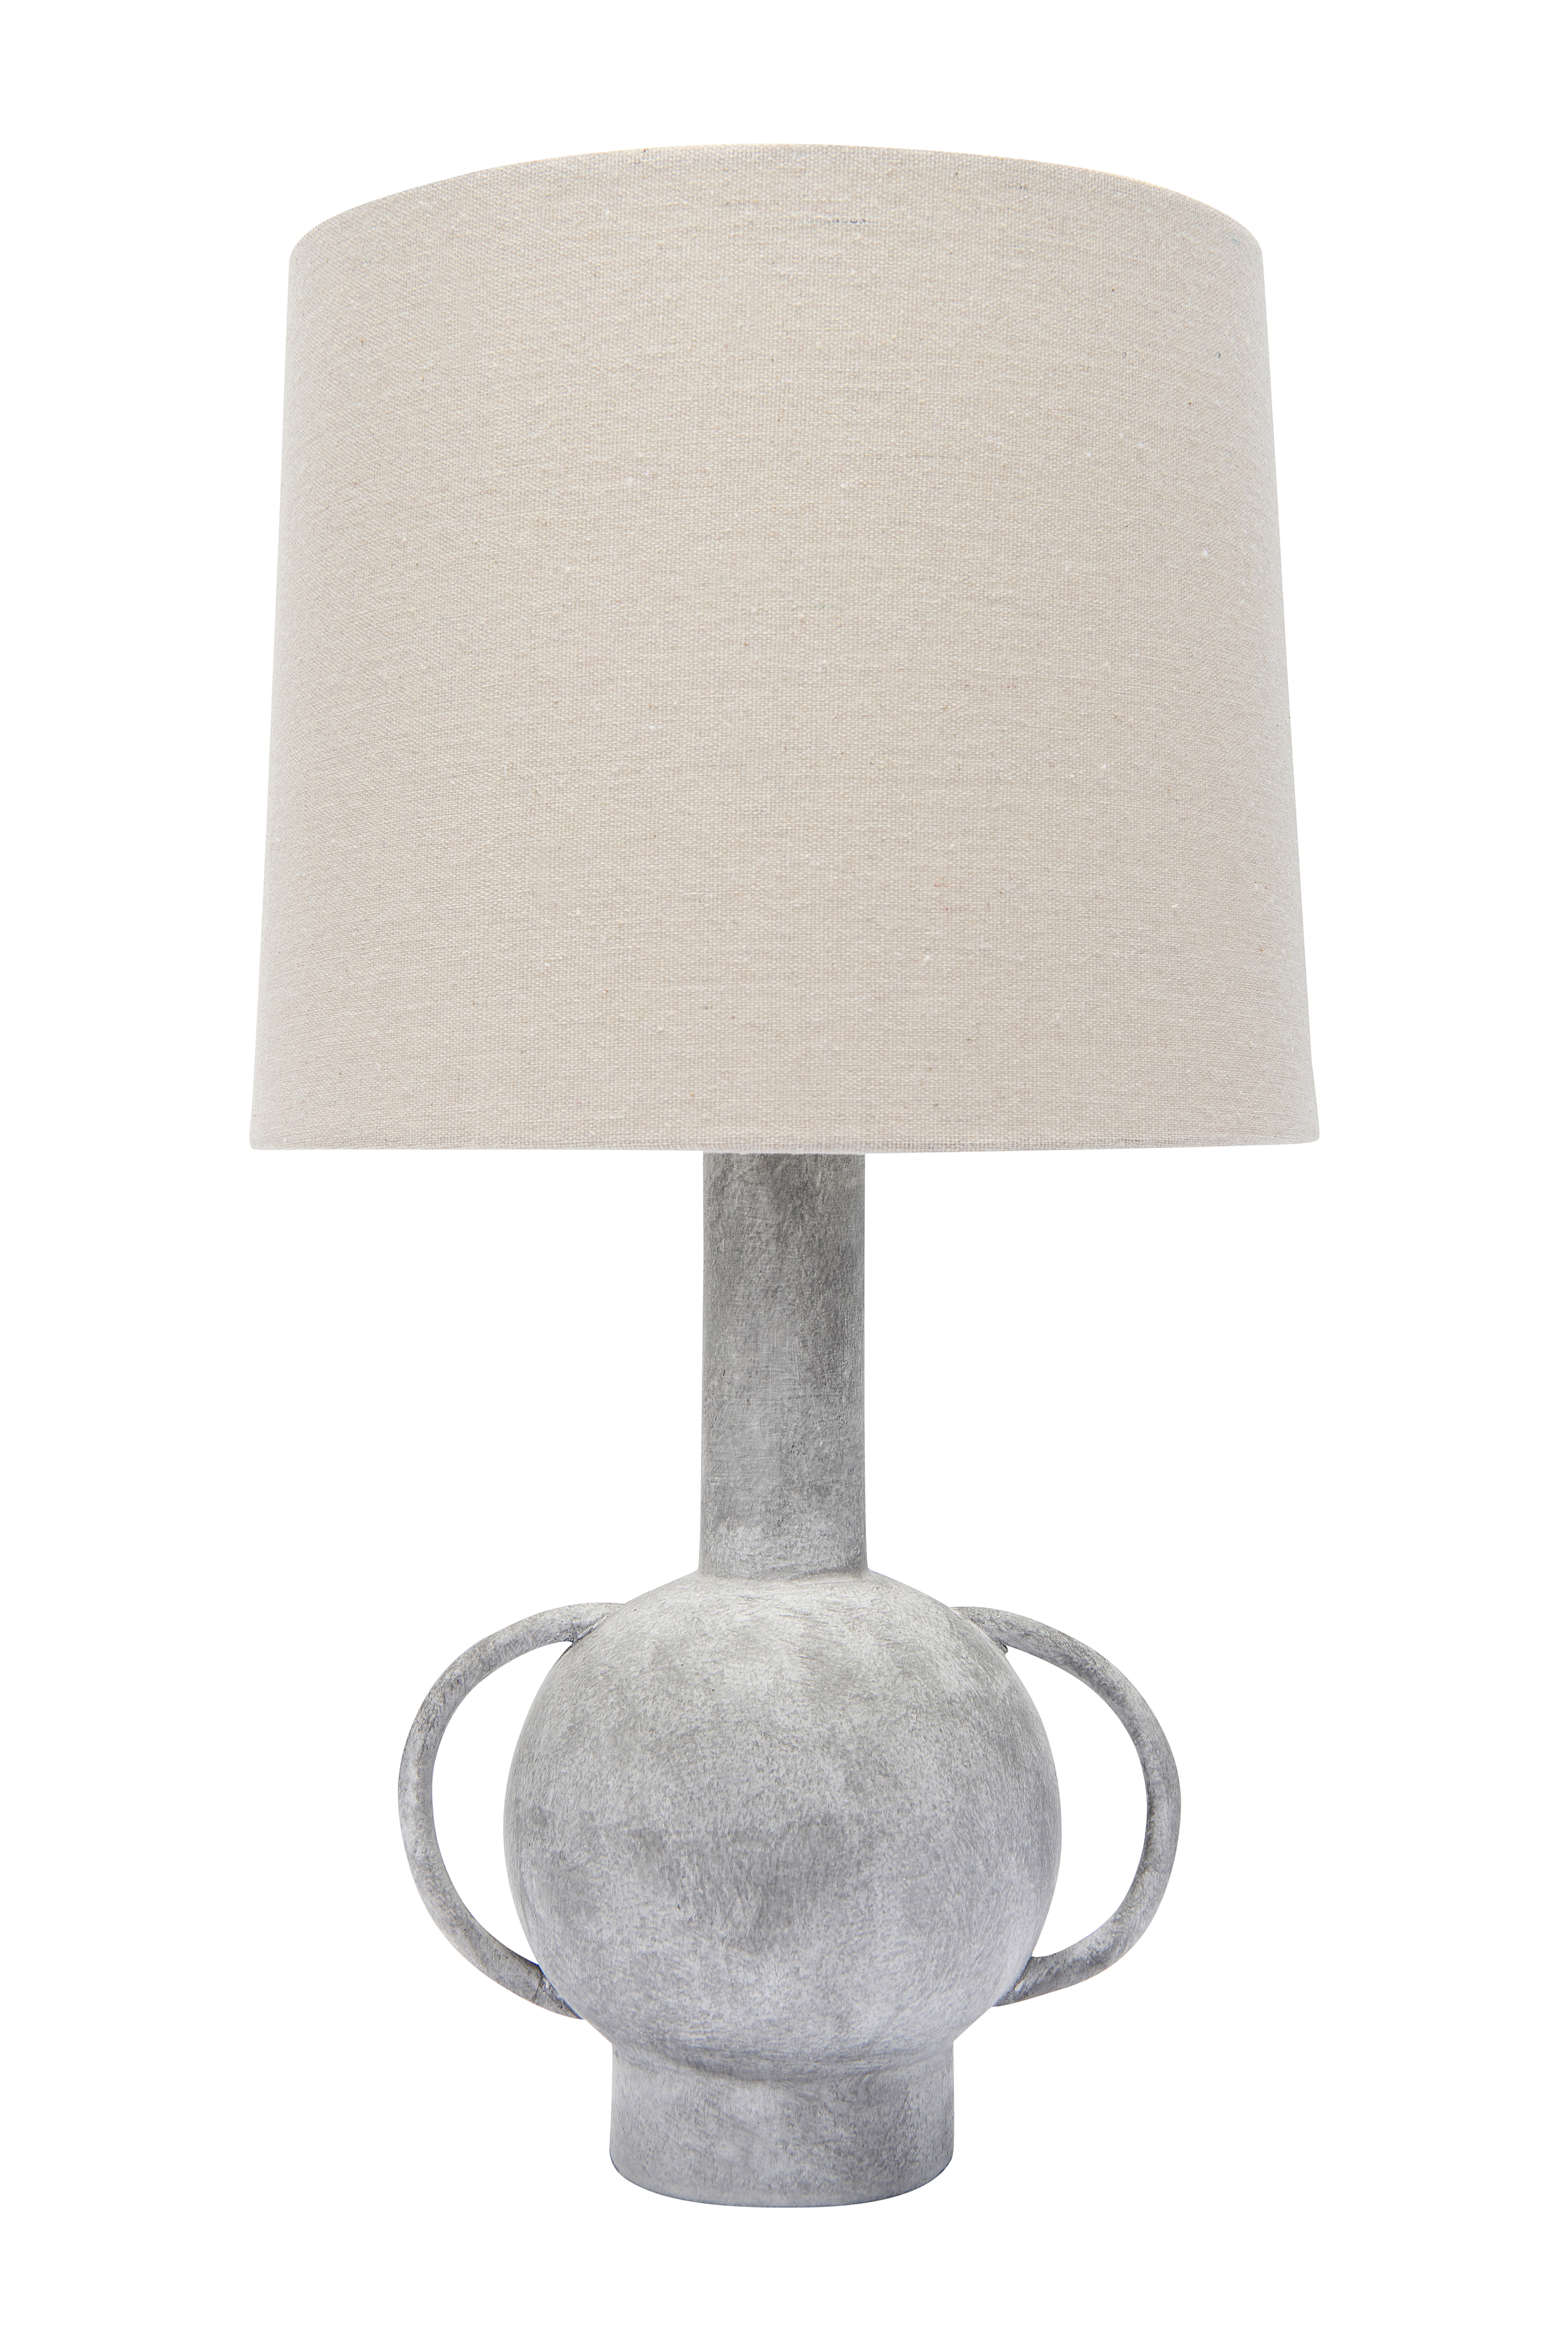 Document Internationale Aanbevolen Bloomingville Terracotta Table Lamp with Handles, Distressed Finish & Linen  Shade - Walmart.com